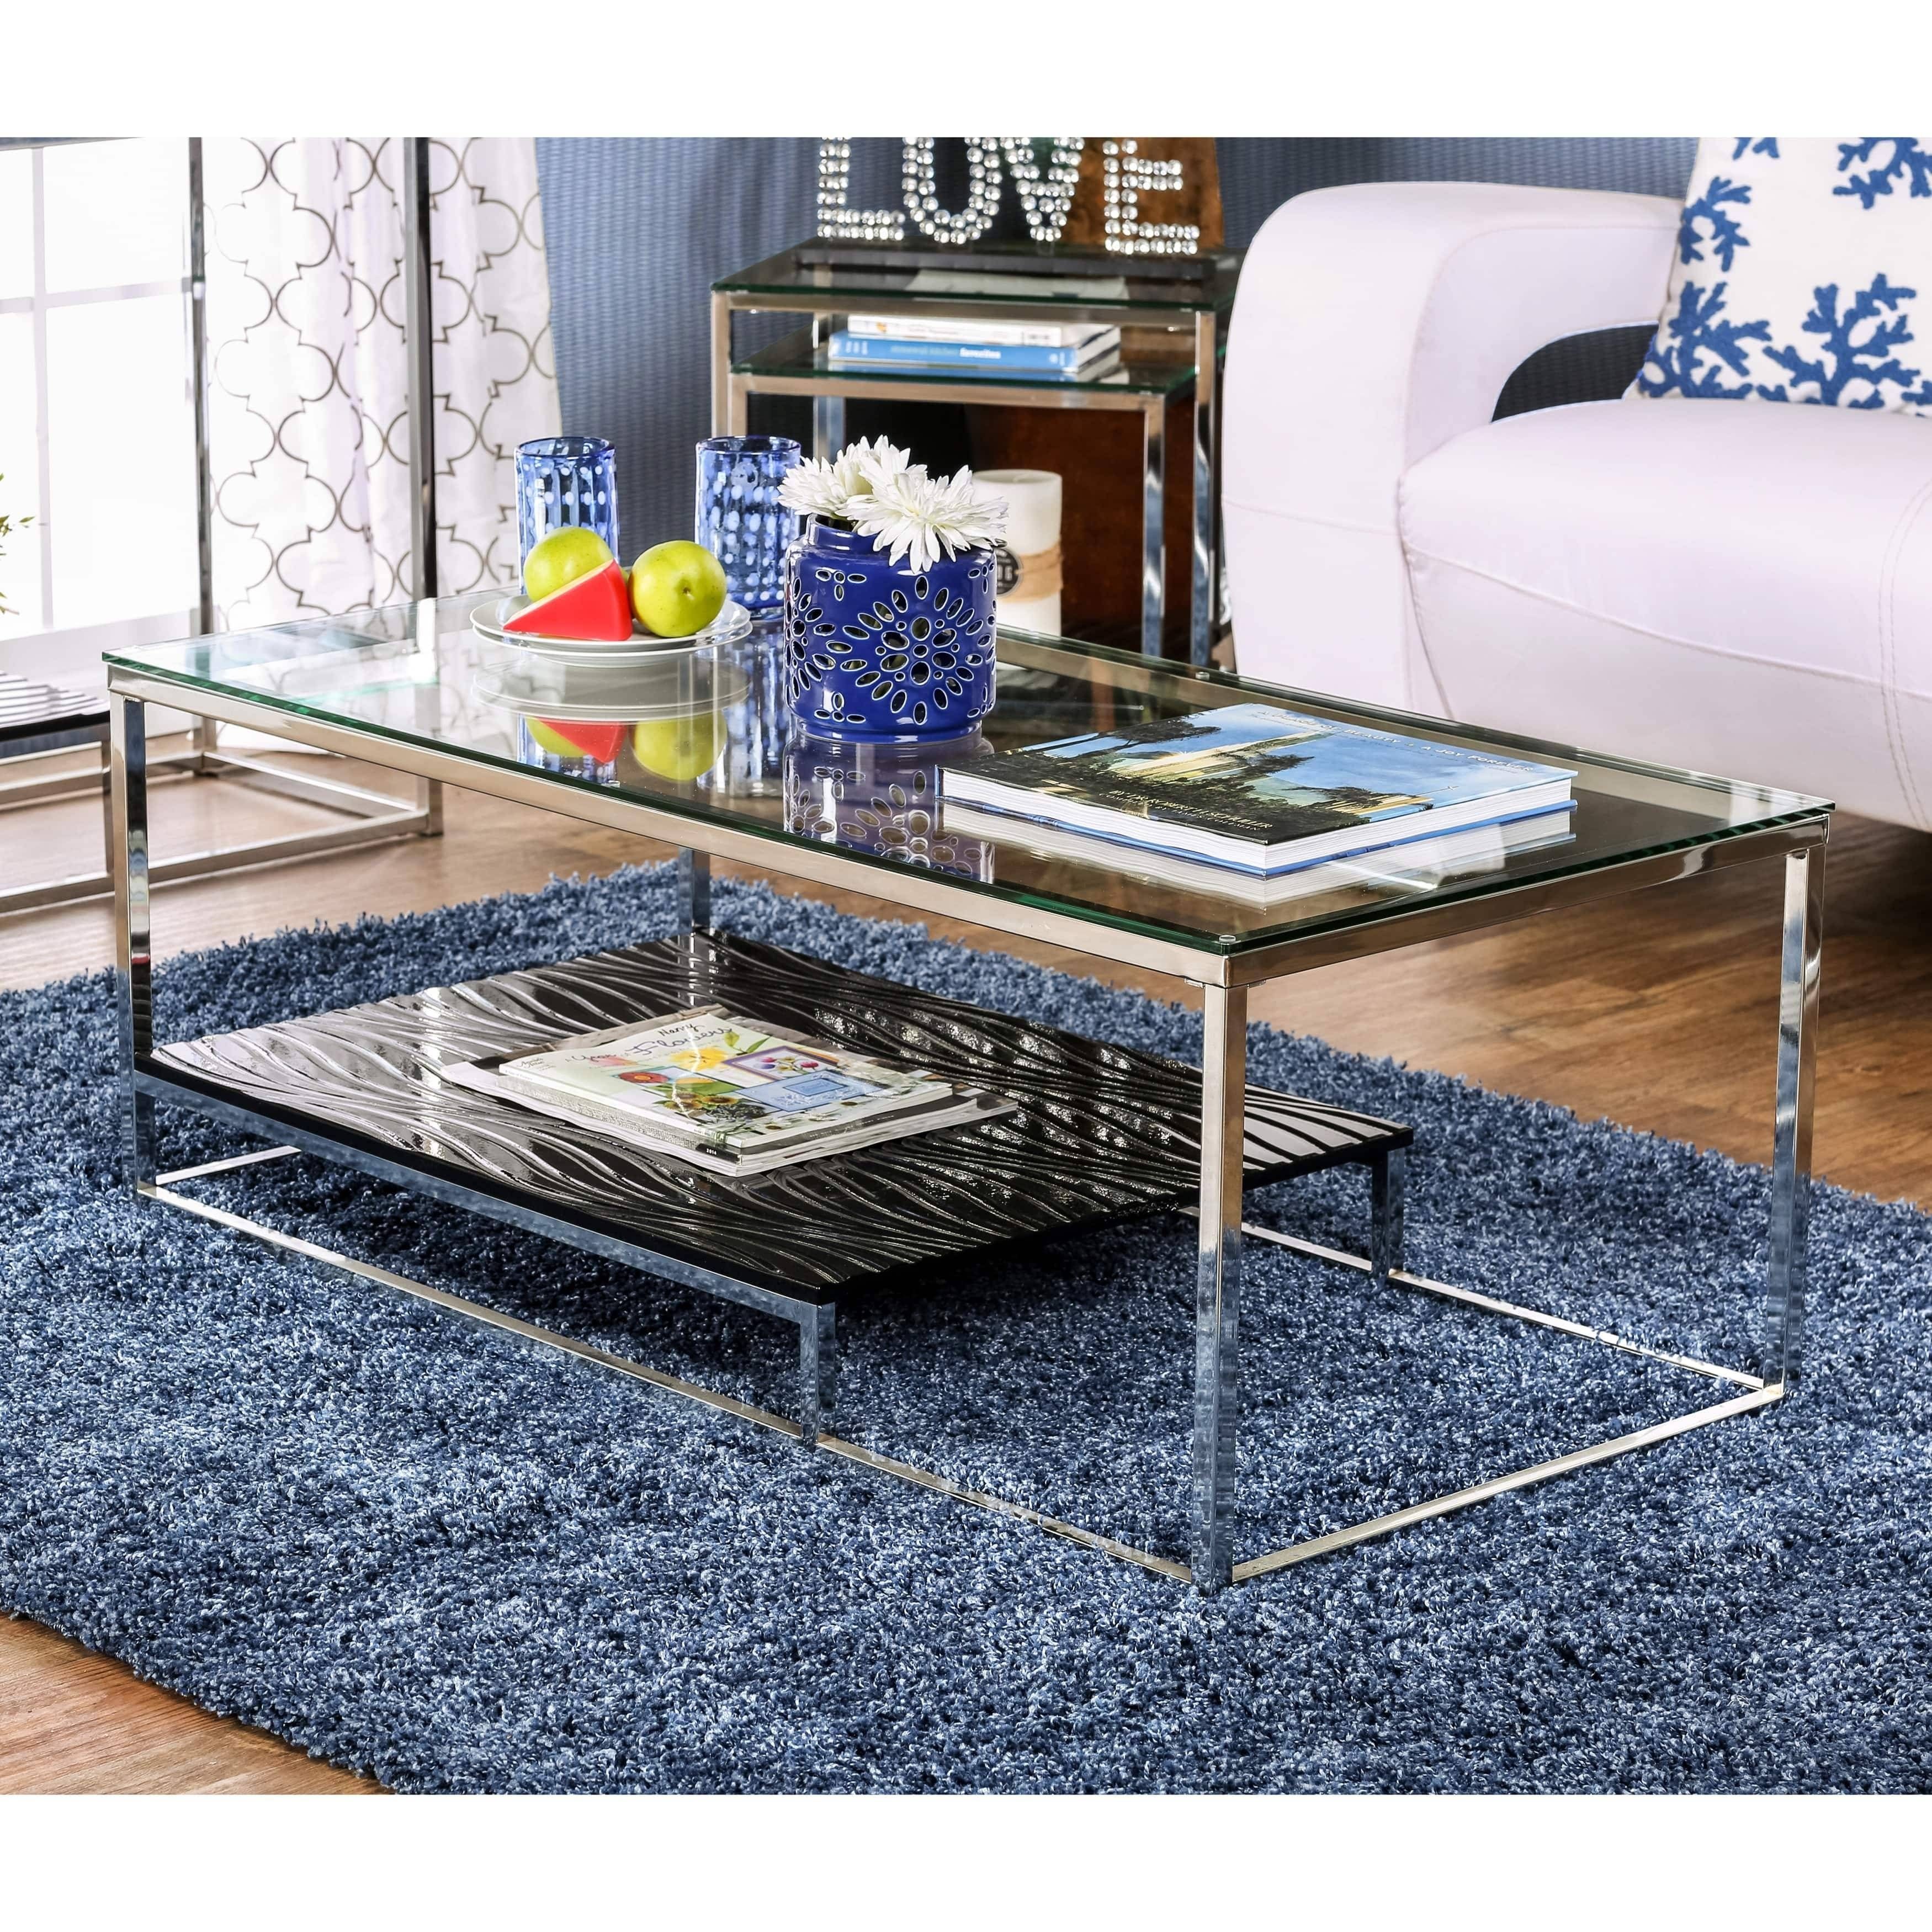 Furniture Of America Deitie Modern Chrome Coffee Table | Ebay In Modern Chrome Coffee Tables (View 26 of 30)